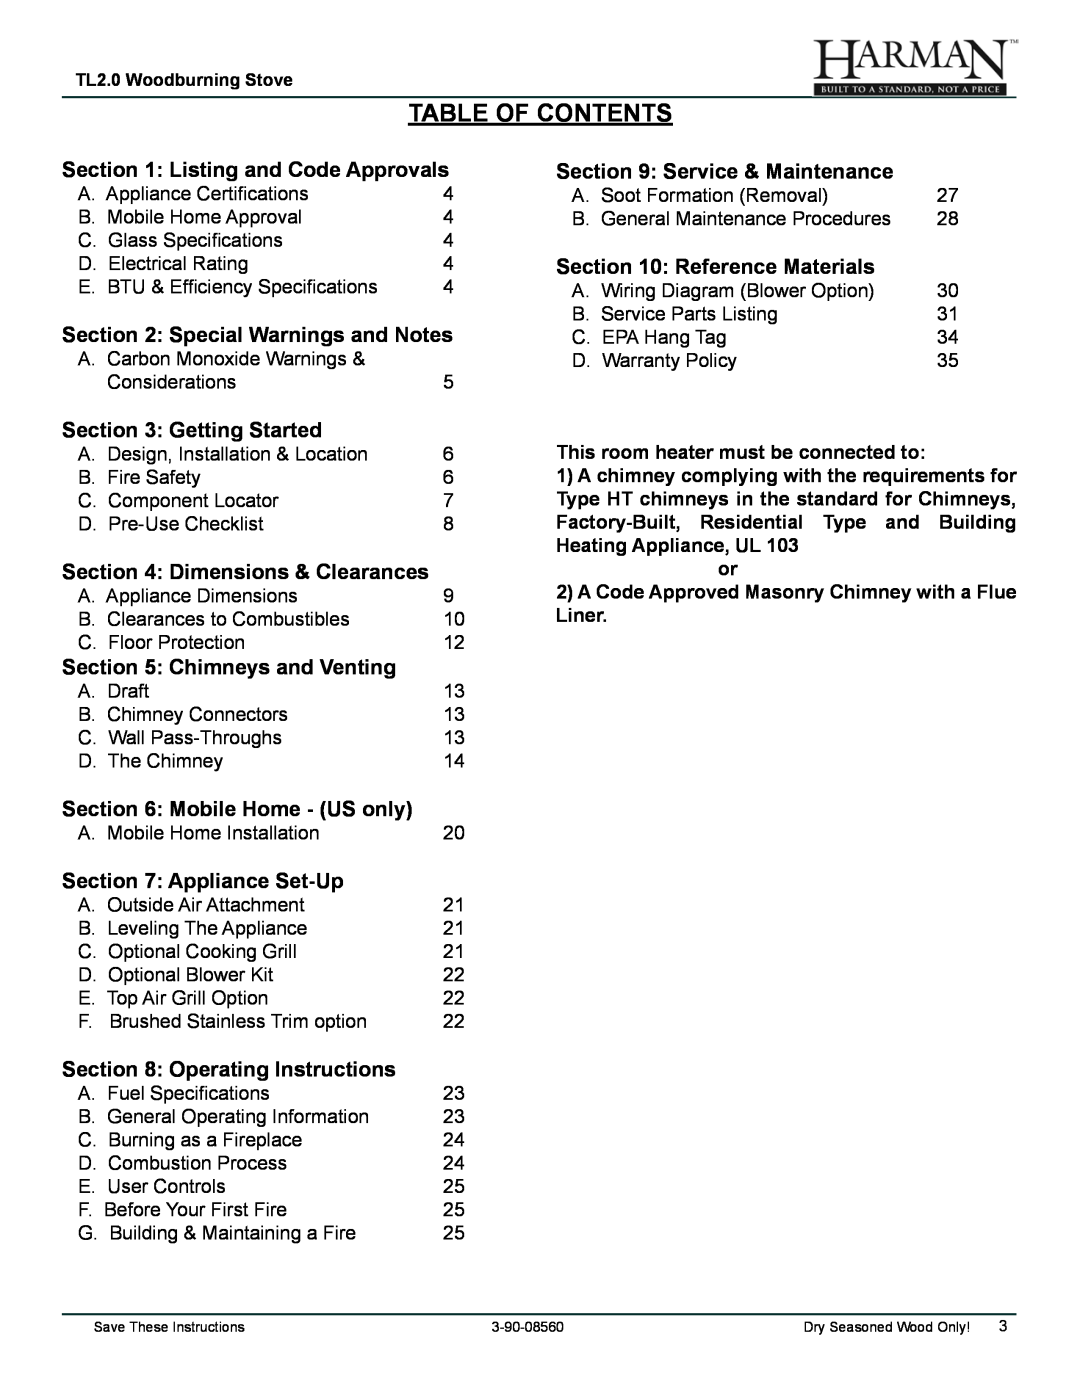 Harman Stove Company TL2.0 manual Table Of Contents 